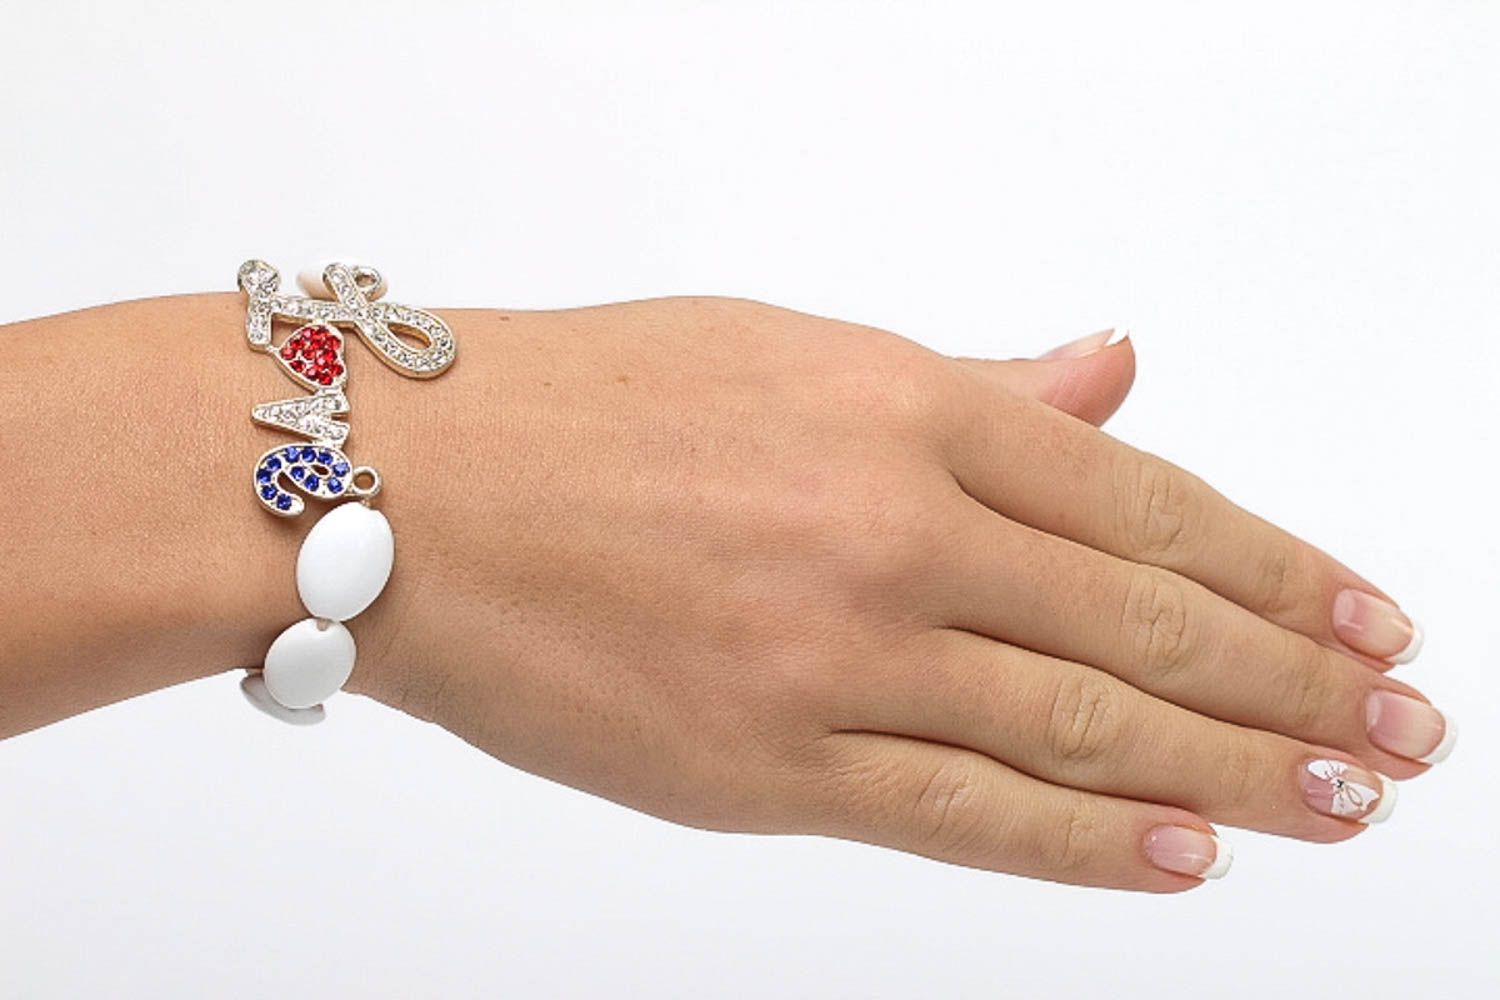 Bead bracelet gemstone jewelry fashion accessories handcrafted jewelry photo 5